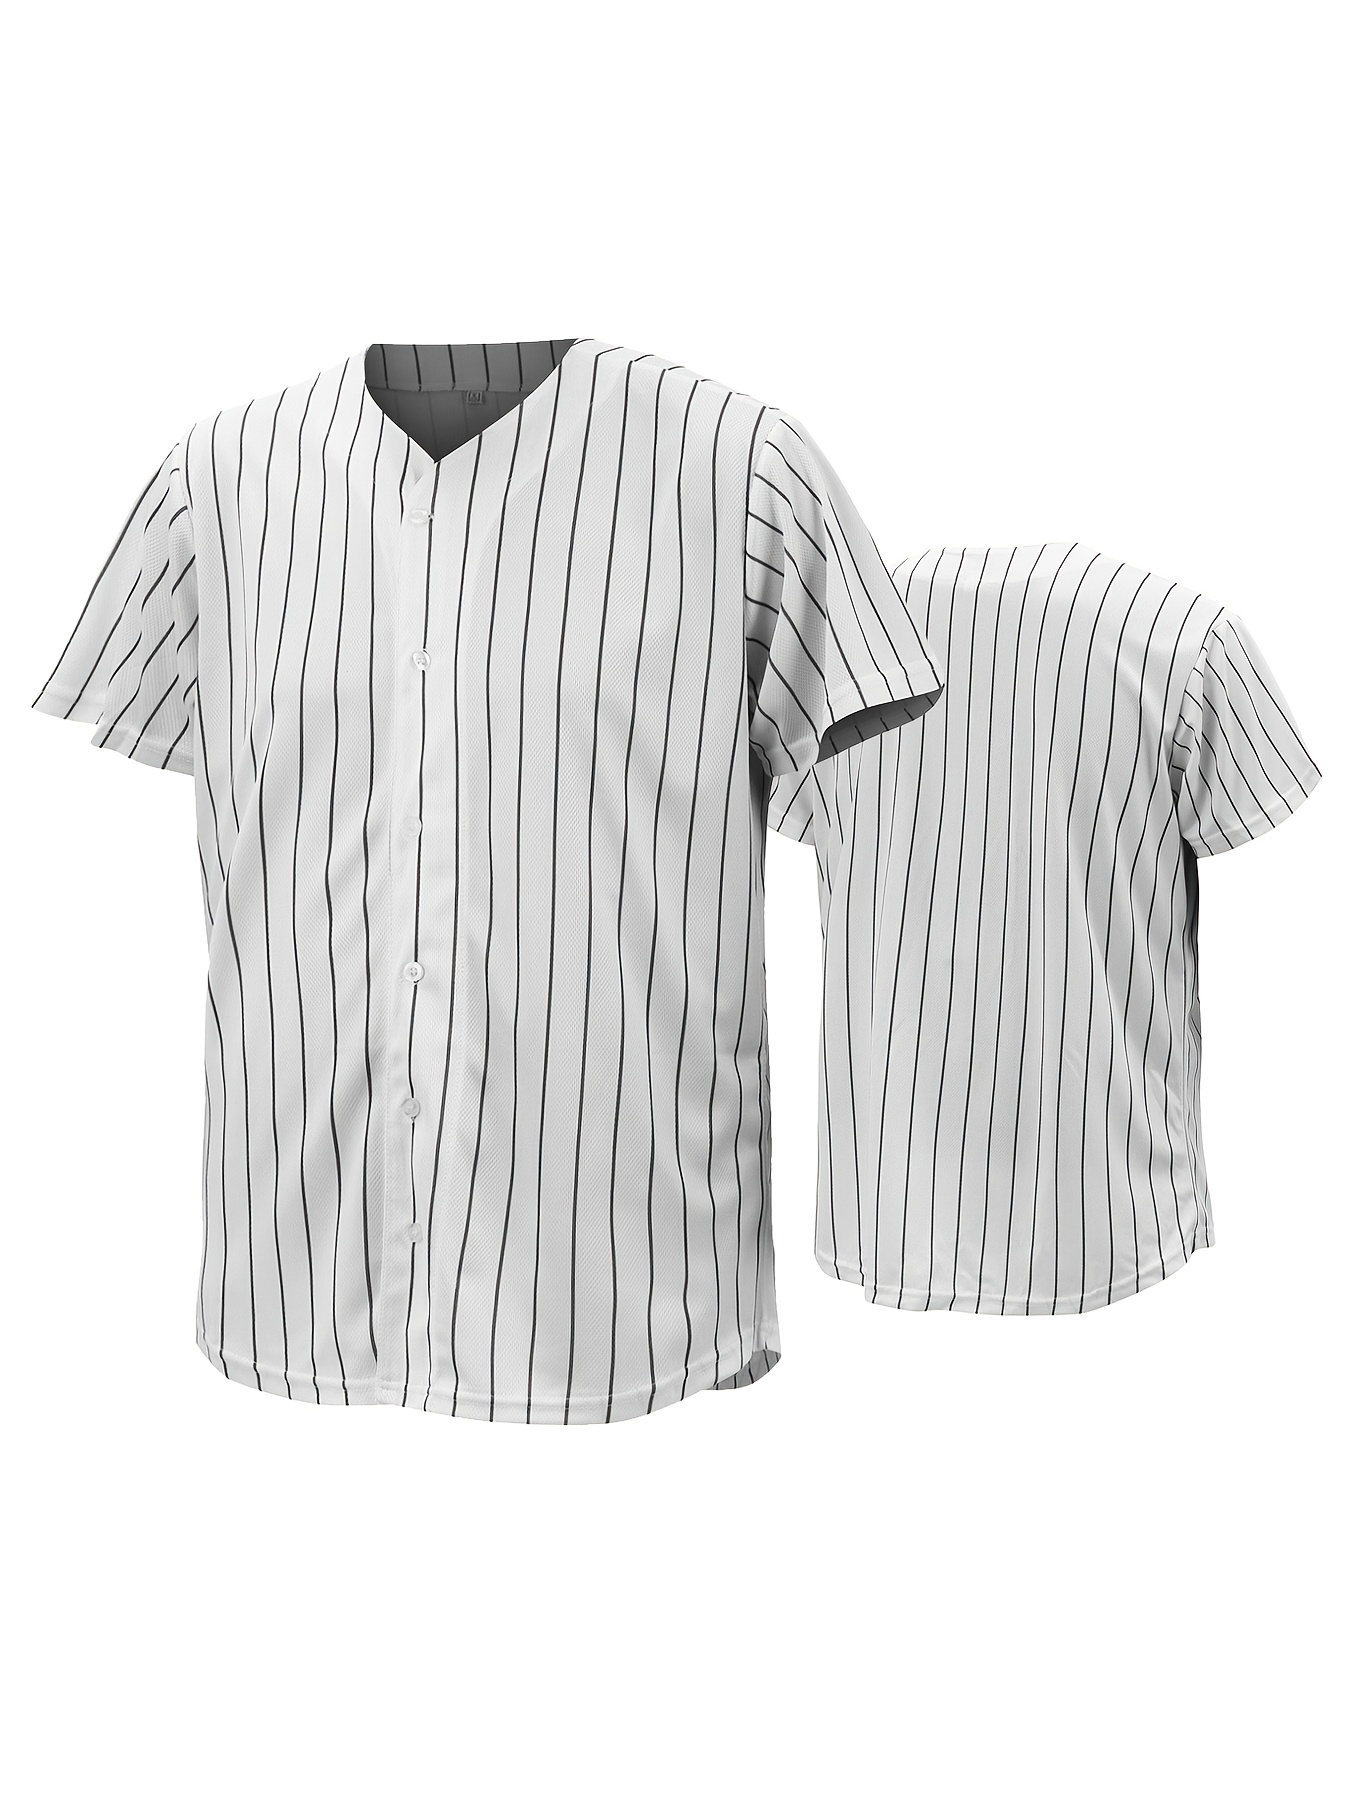 Biggie Smalls The Notorious MLB Inspired Pinstripe White Black Baseball  Jersey